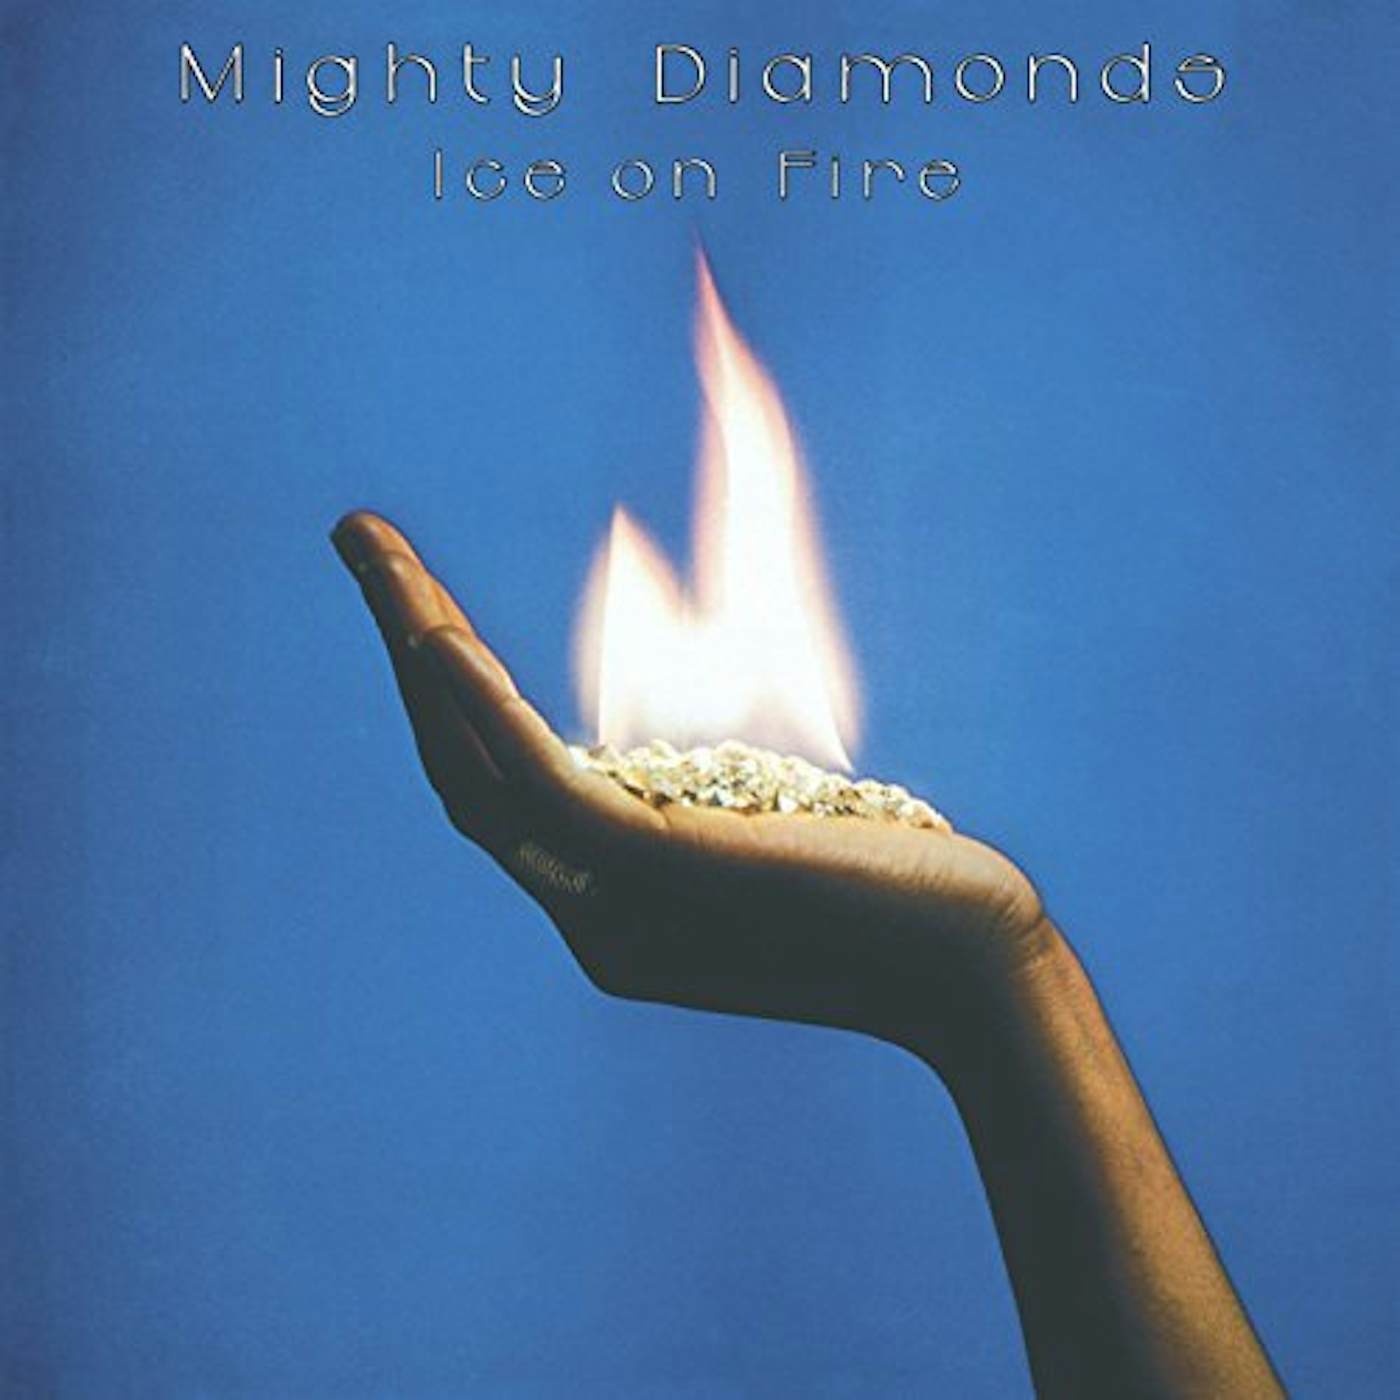 Mighty Diamonds Ice On Fire Vinyl Record